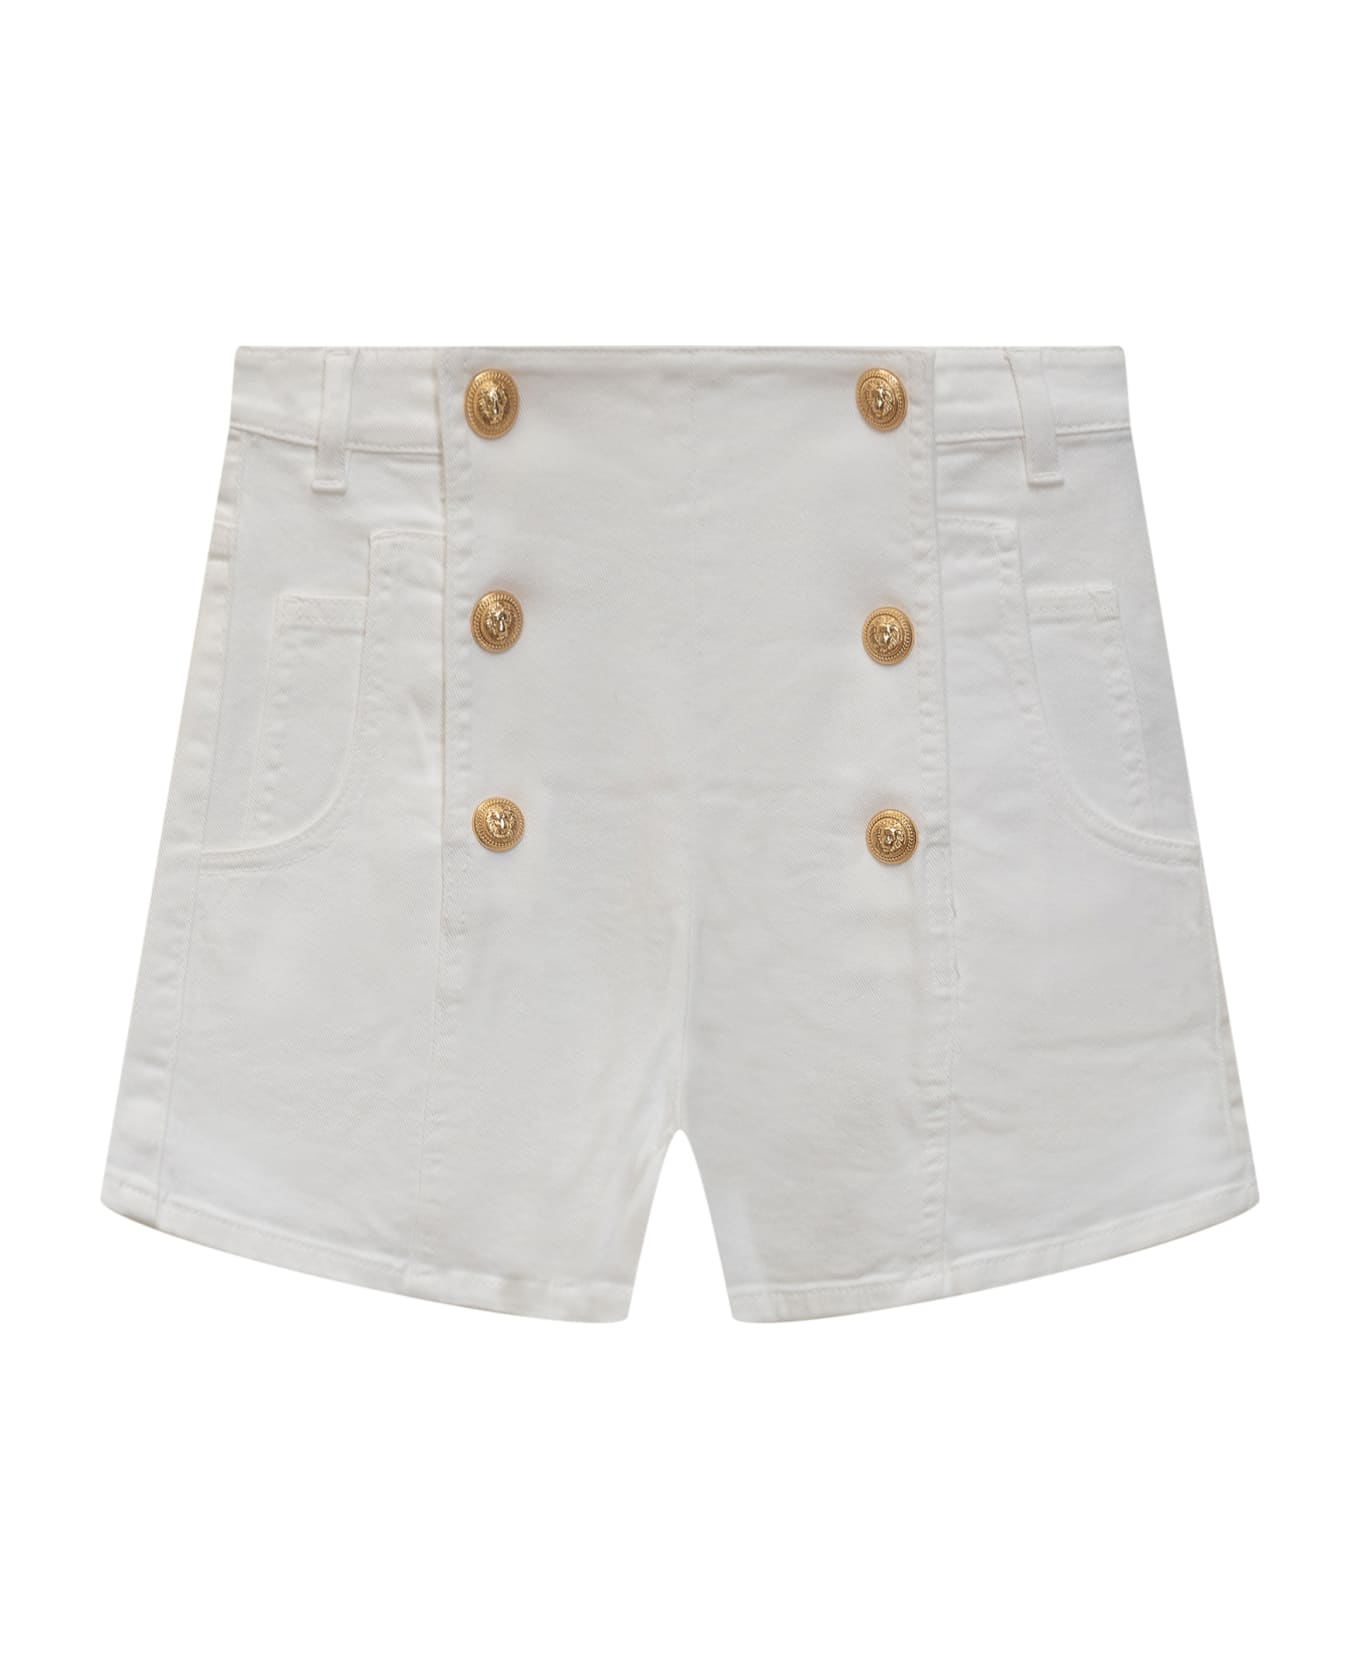 Balmain Logo Shorts - WHITE/GOLD ボトムス